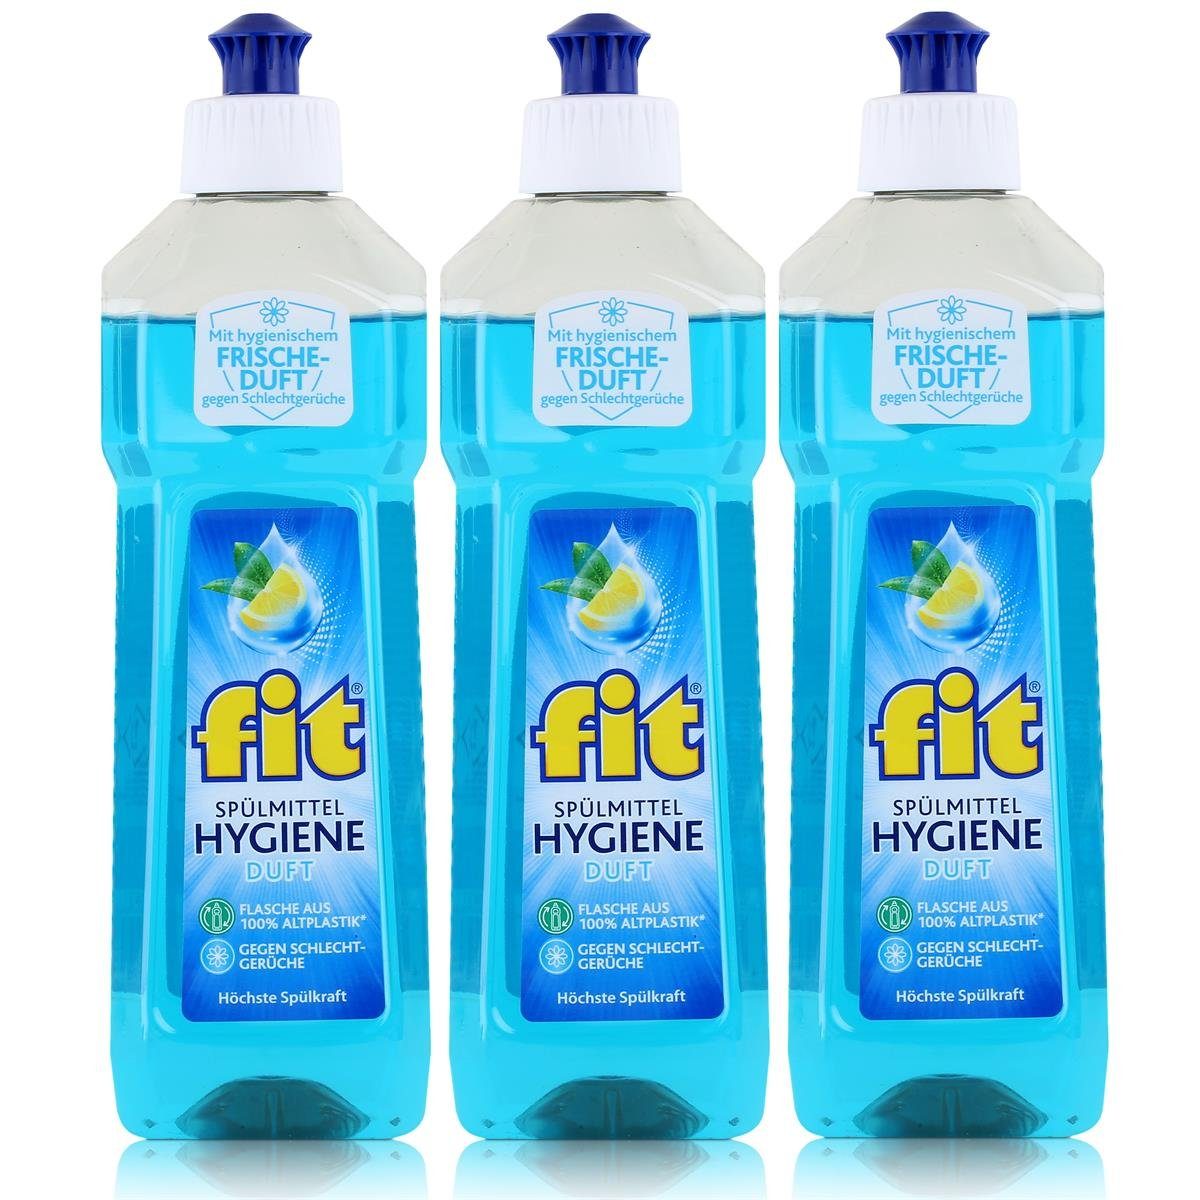 FIT fit Spülmittel Hygiene Duft 500ml - Höchste Spülkraft (3er Pack) Geschirrspülmittel